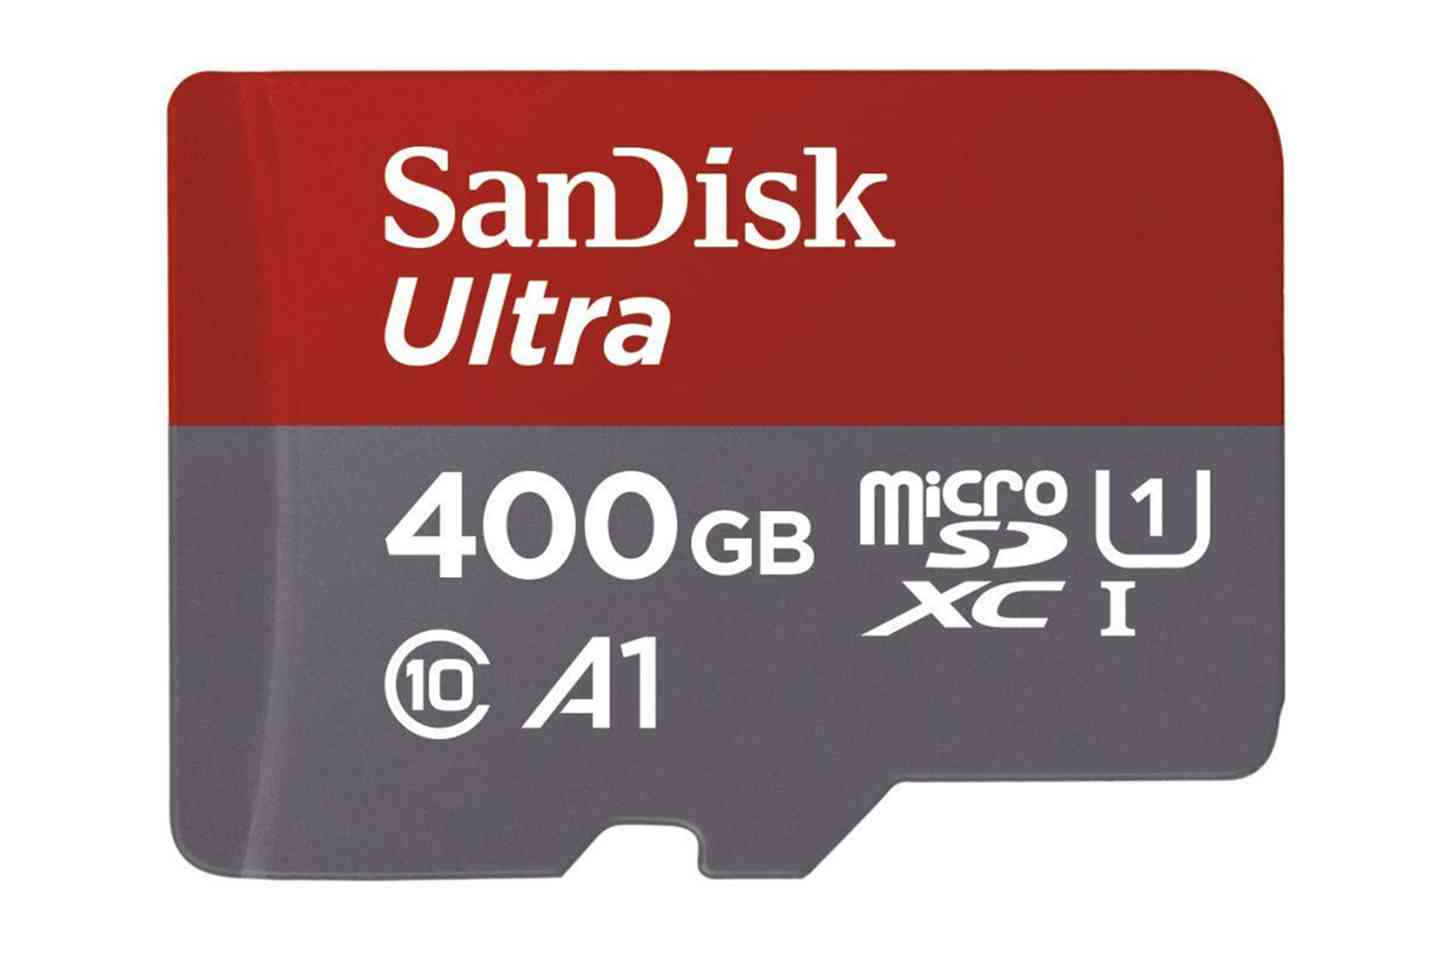 SanDisk 400GB microSD card